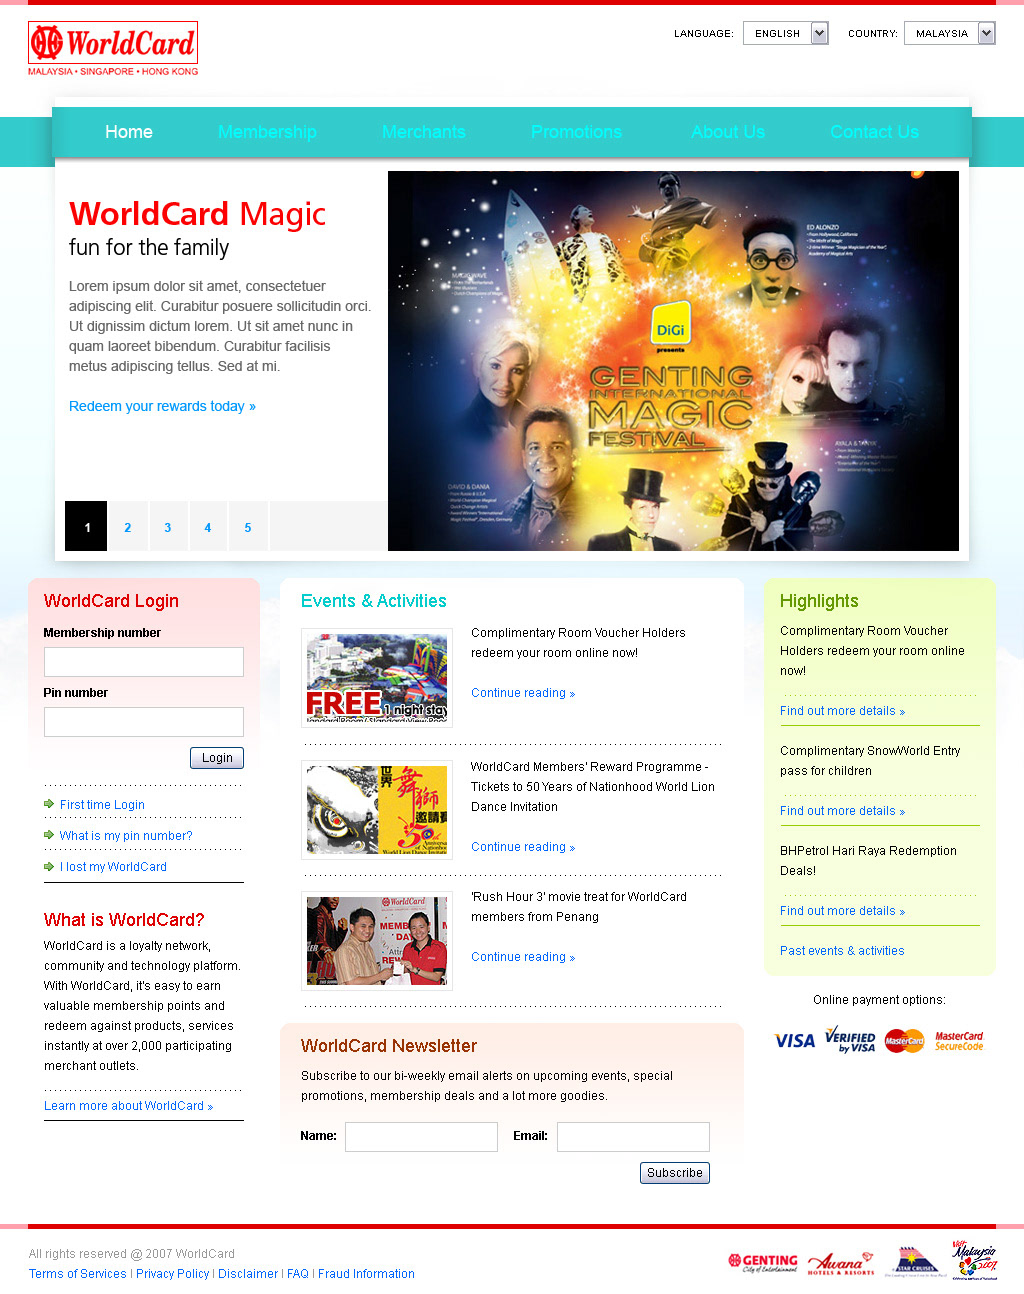 genting worldcard resort world loyalty website Mockup